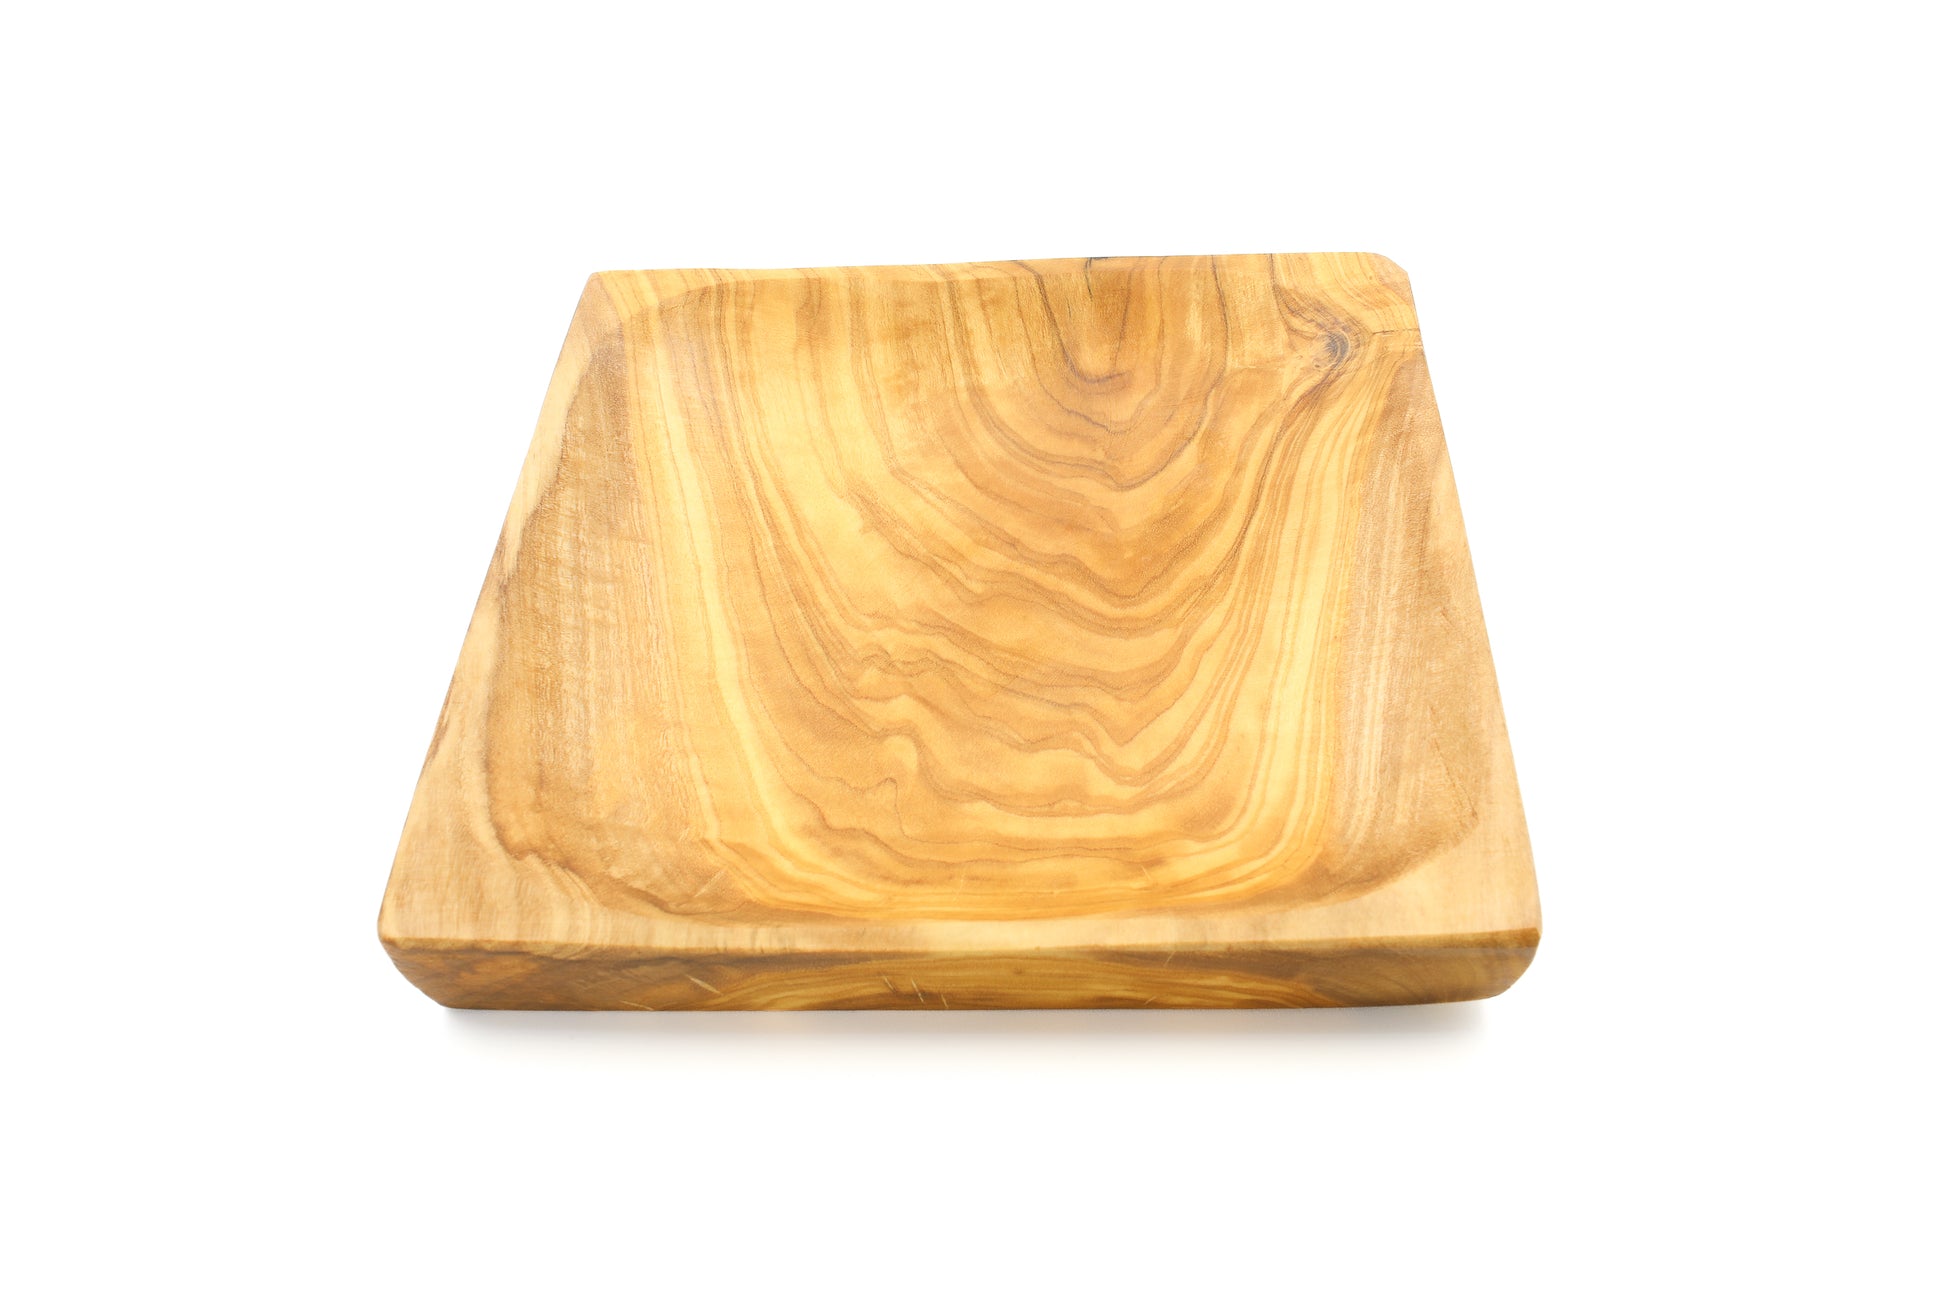 Artisanal square olive wood plates and rectangular dishes